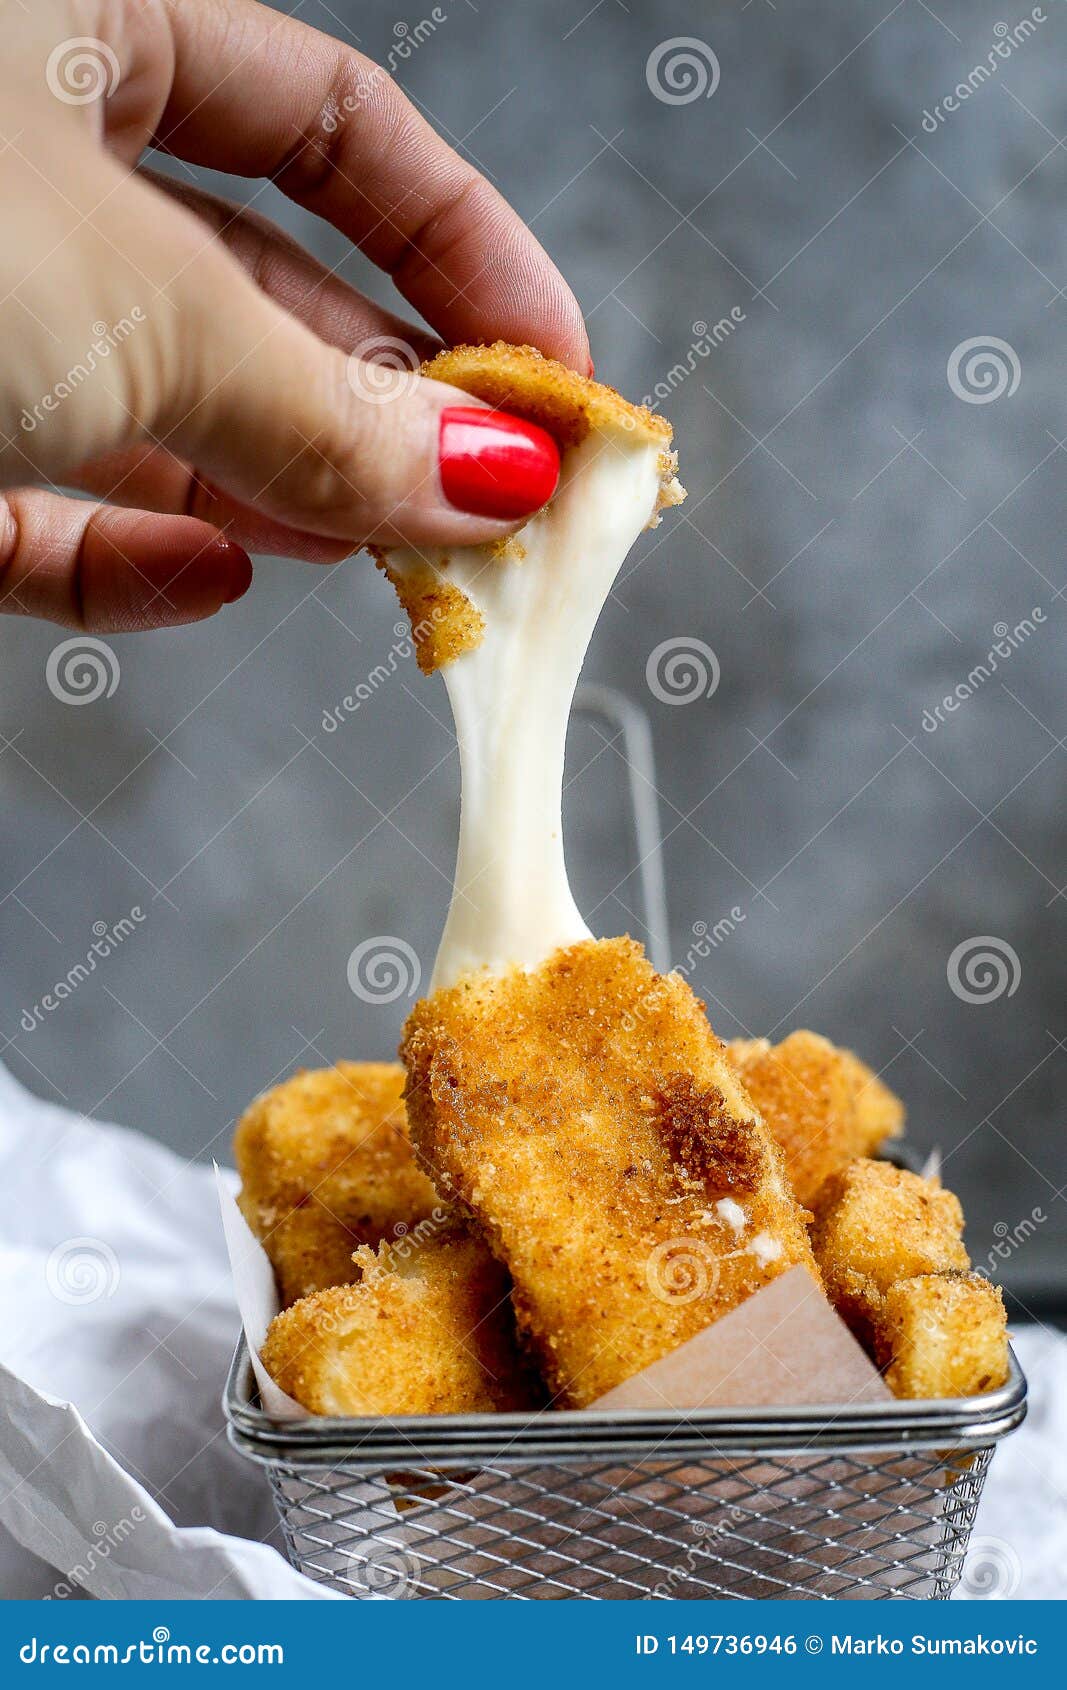 mozzarella sticks melting with woman hand